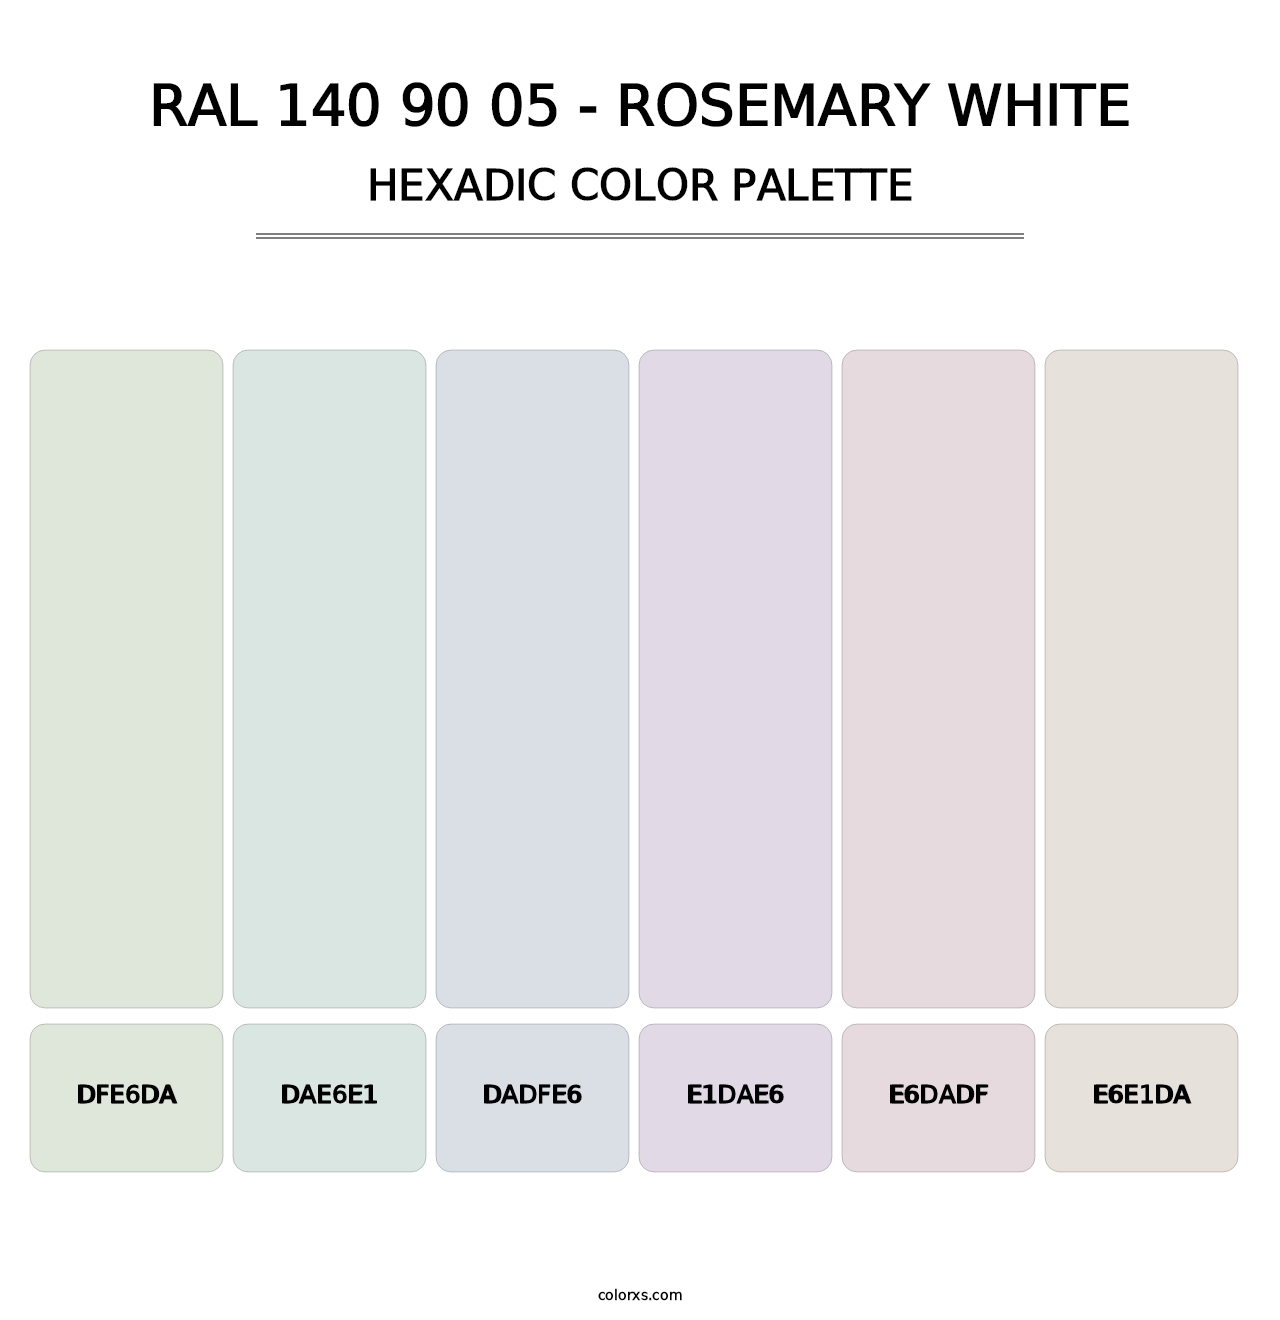 RAL 140 90 05 - Rosemary White - Hexadic Color Palette